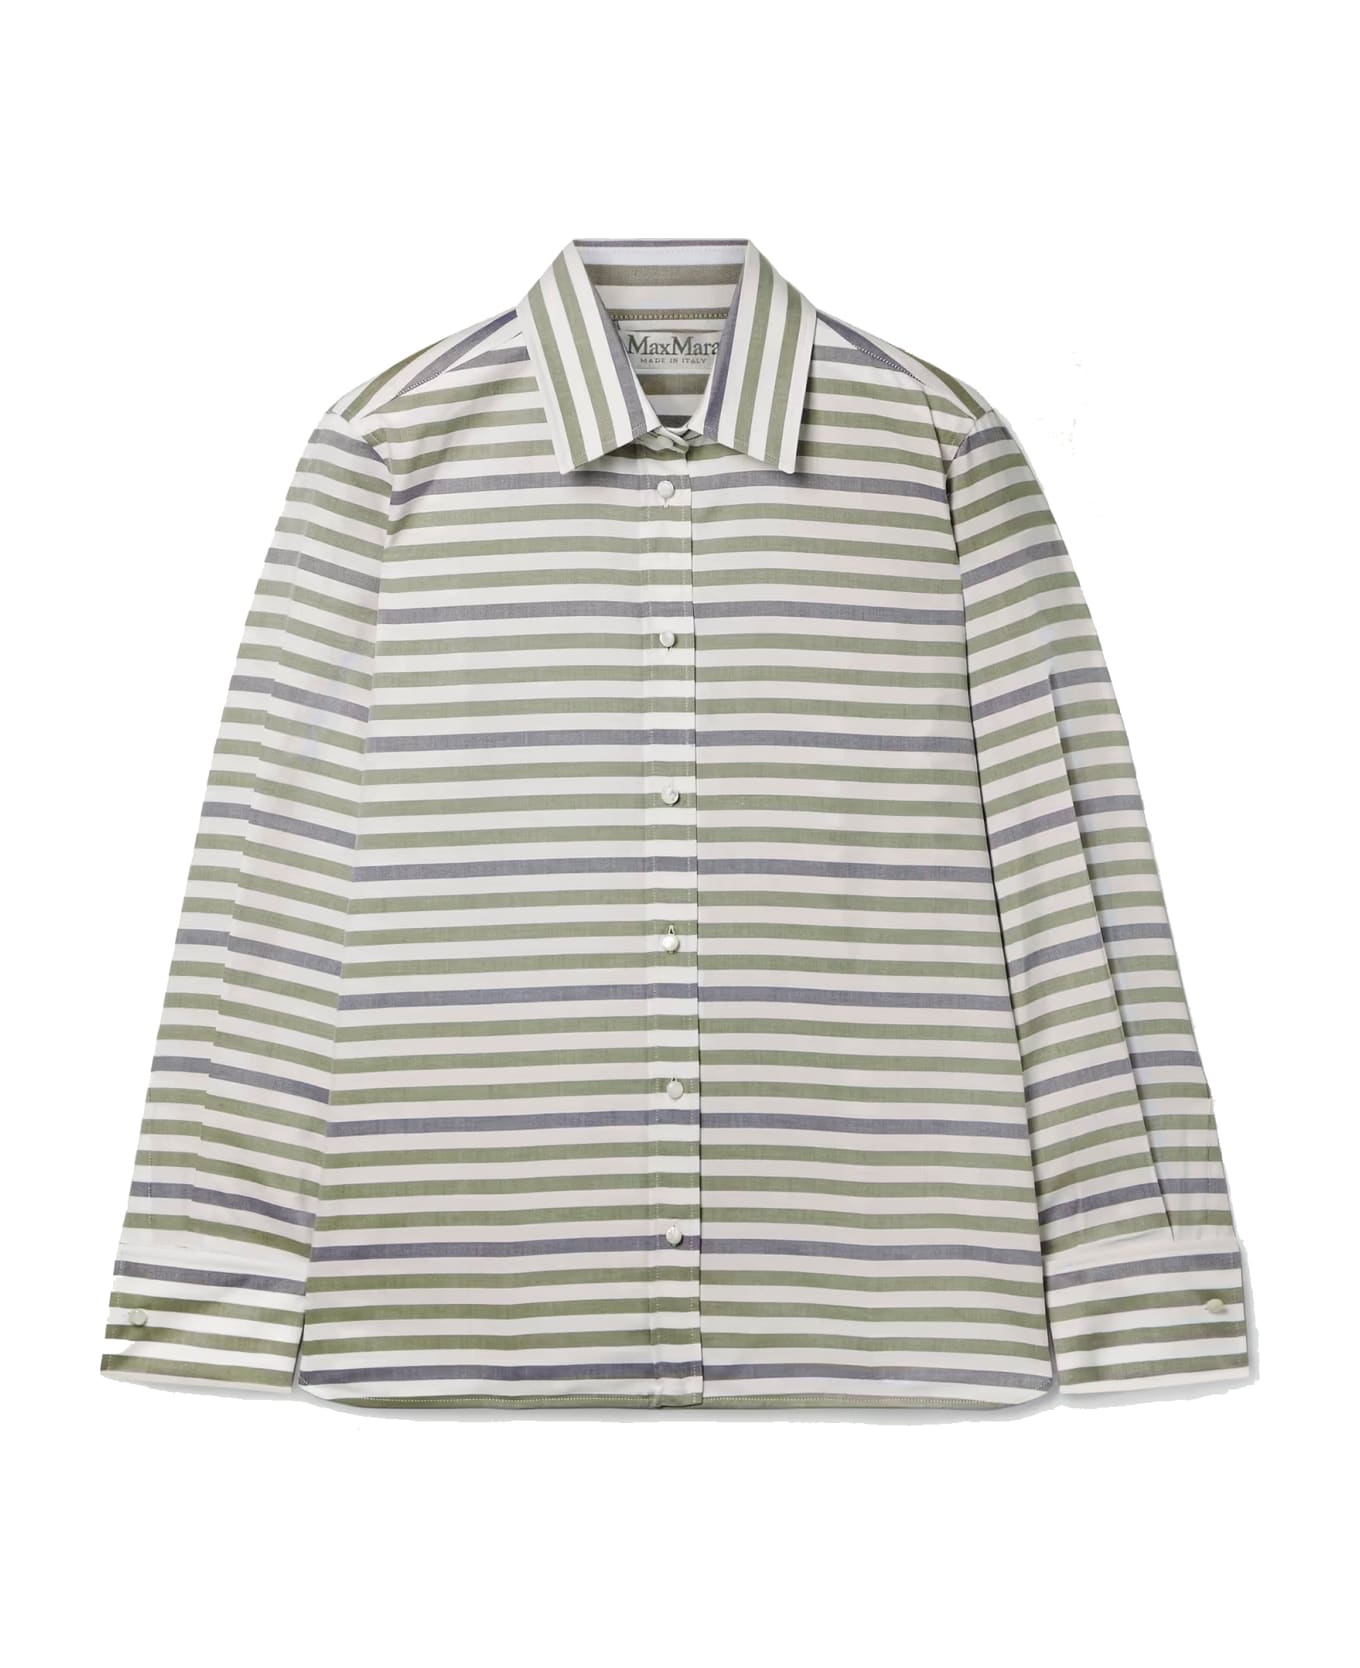 Max Mara Davy Striped Oxford Shirt - Green